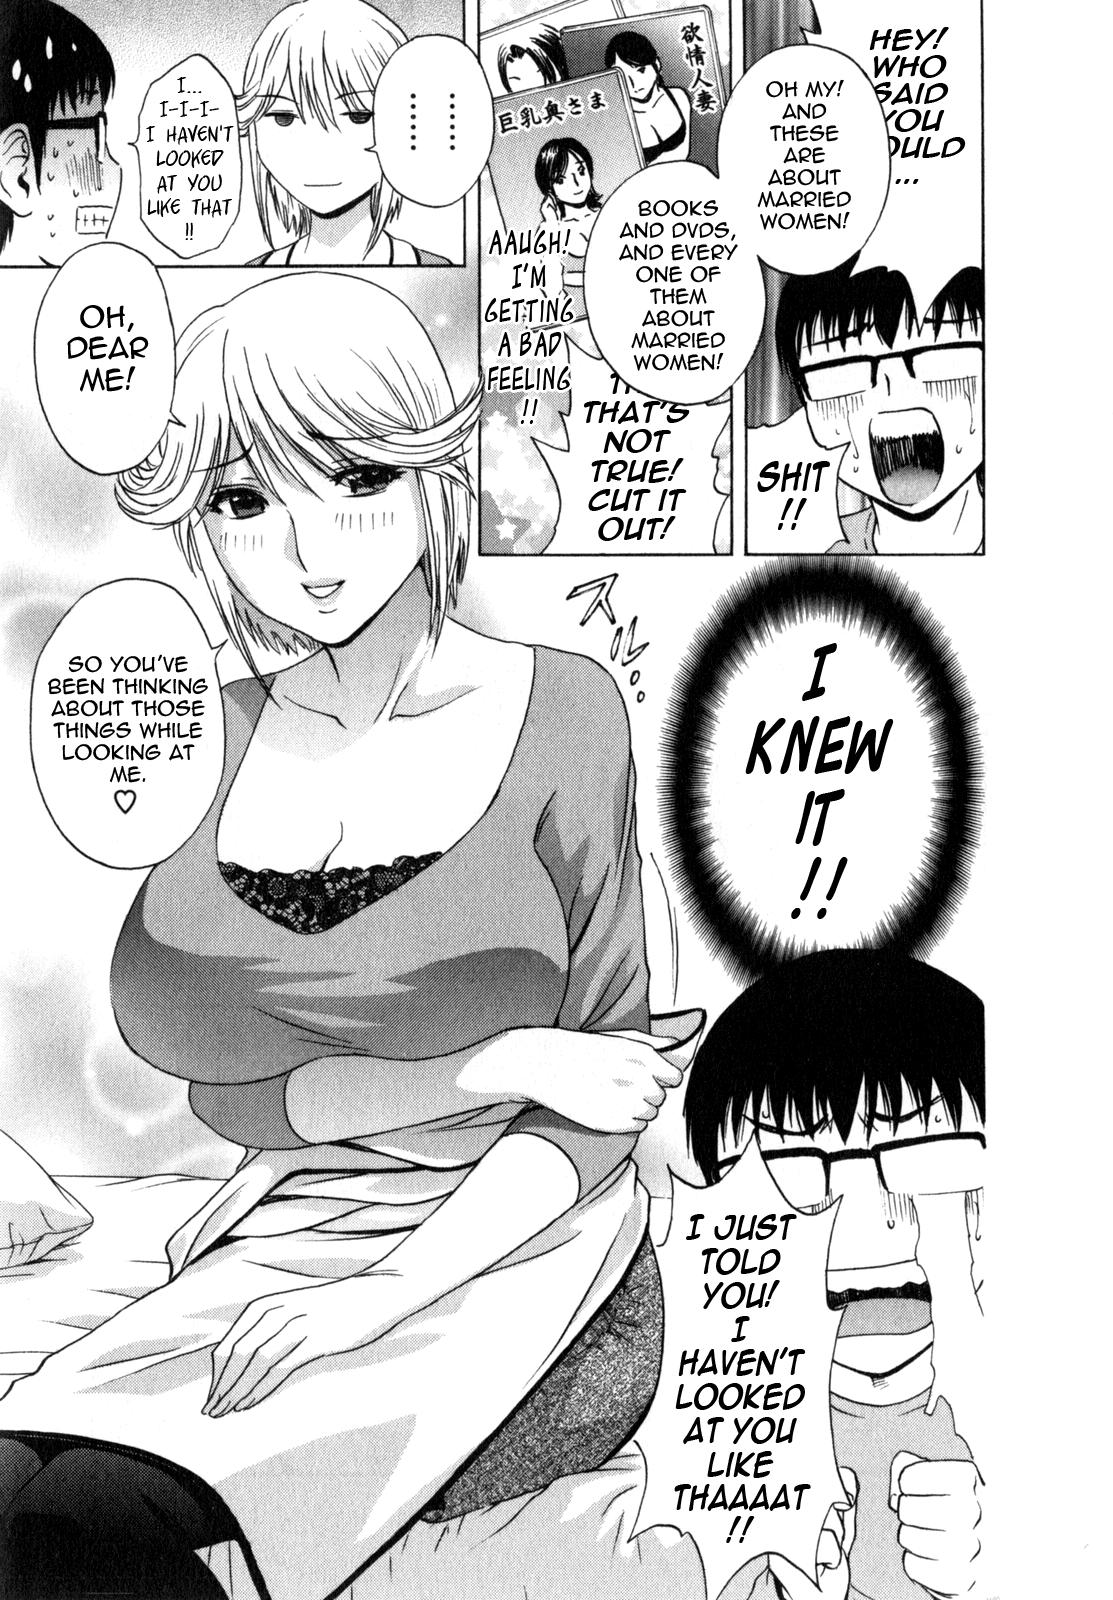 [Hidemaru] Life with Married Women Just Like a Manga 1 - Ch. 1-5 [English] {Tadanohito} 30